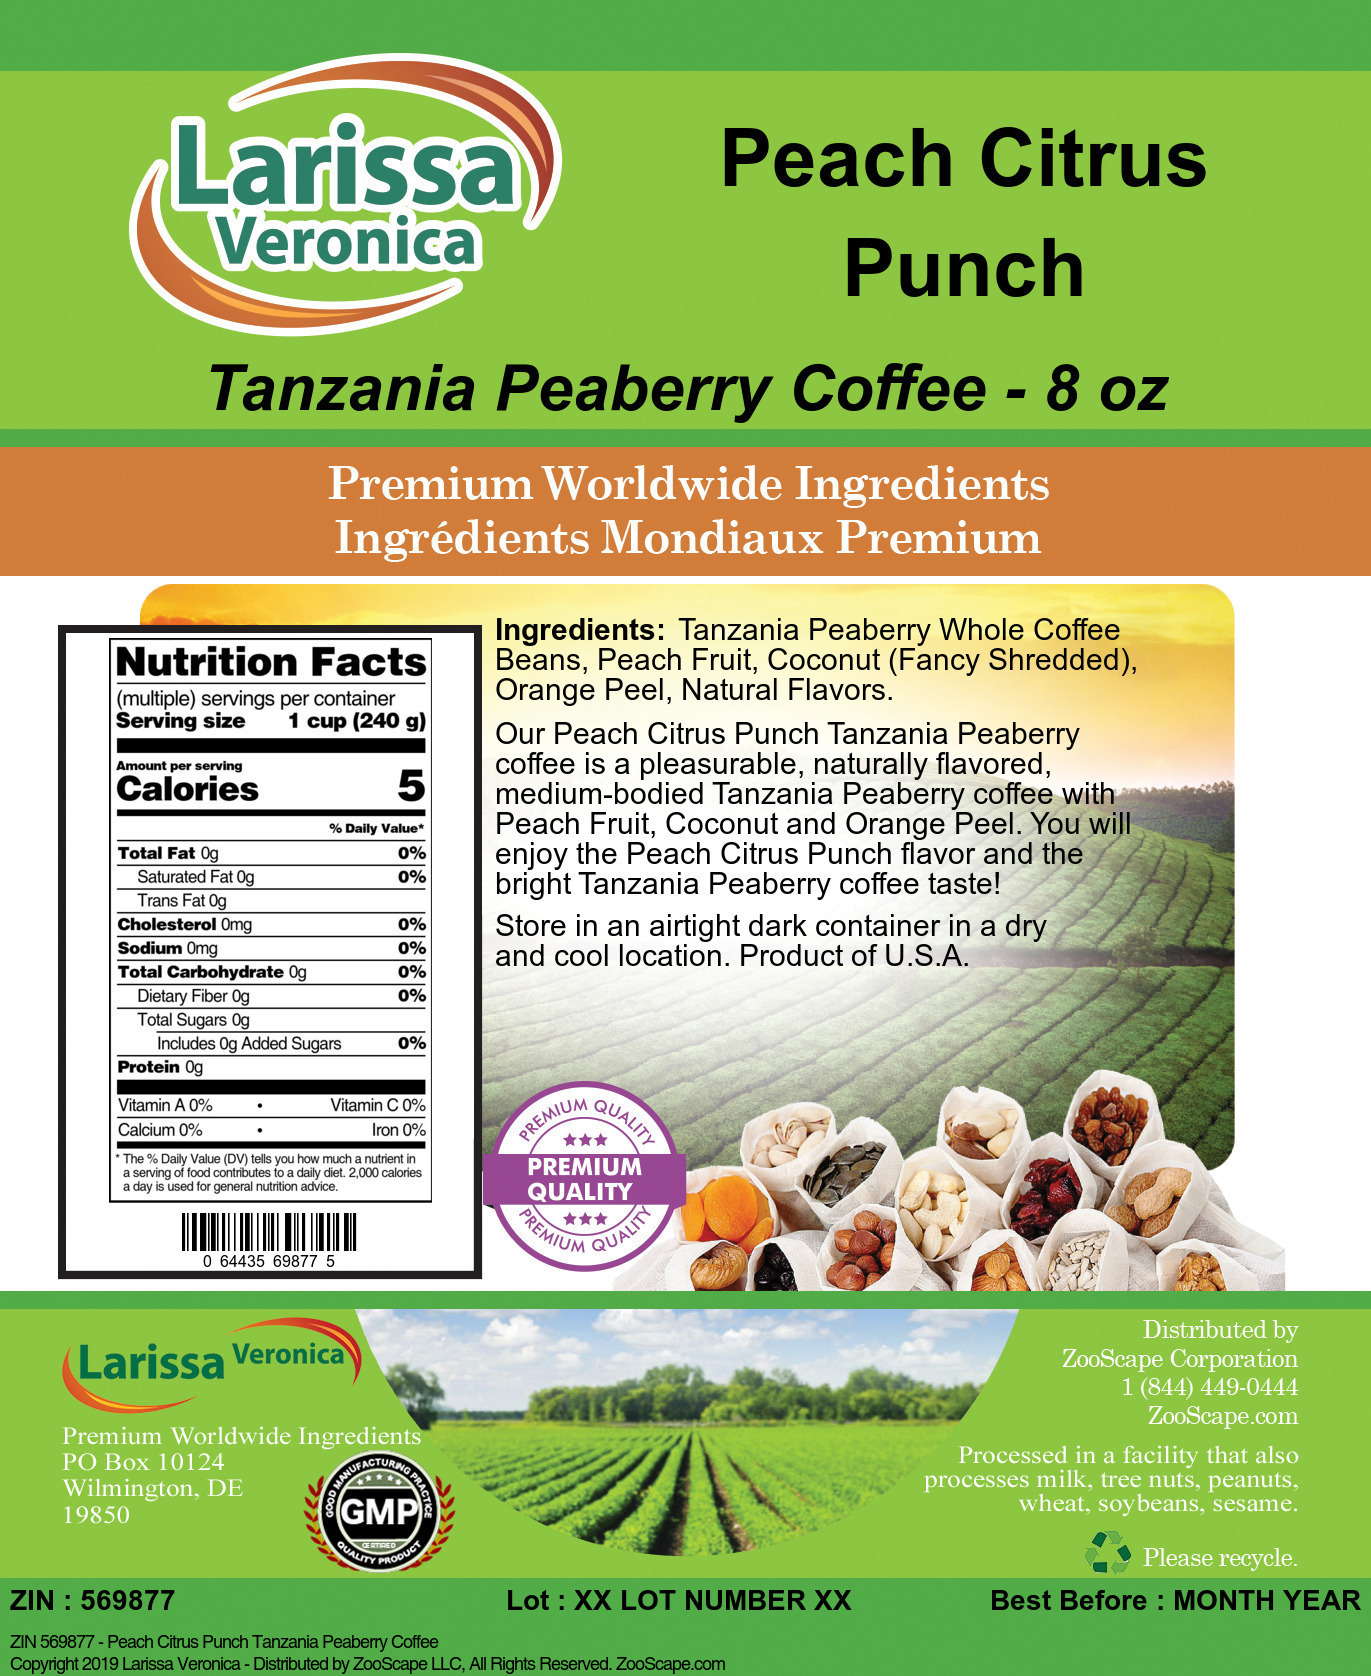 Peach Citrus Punch Tanzania Peaberry Coffee - Label